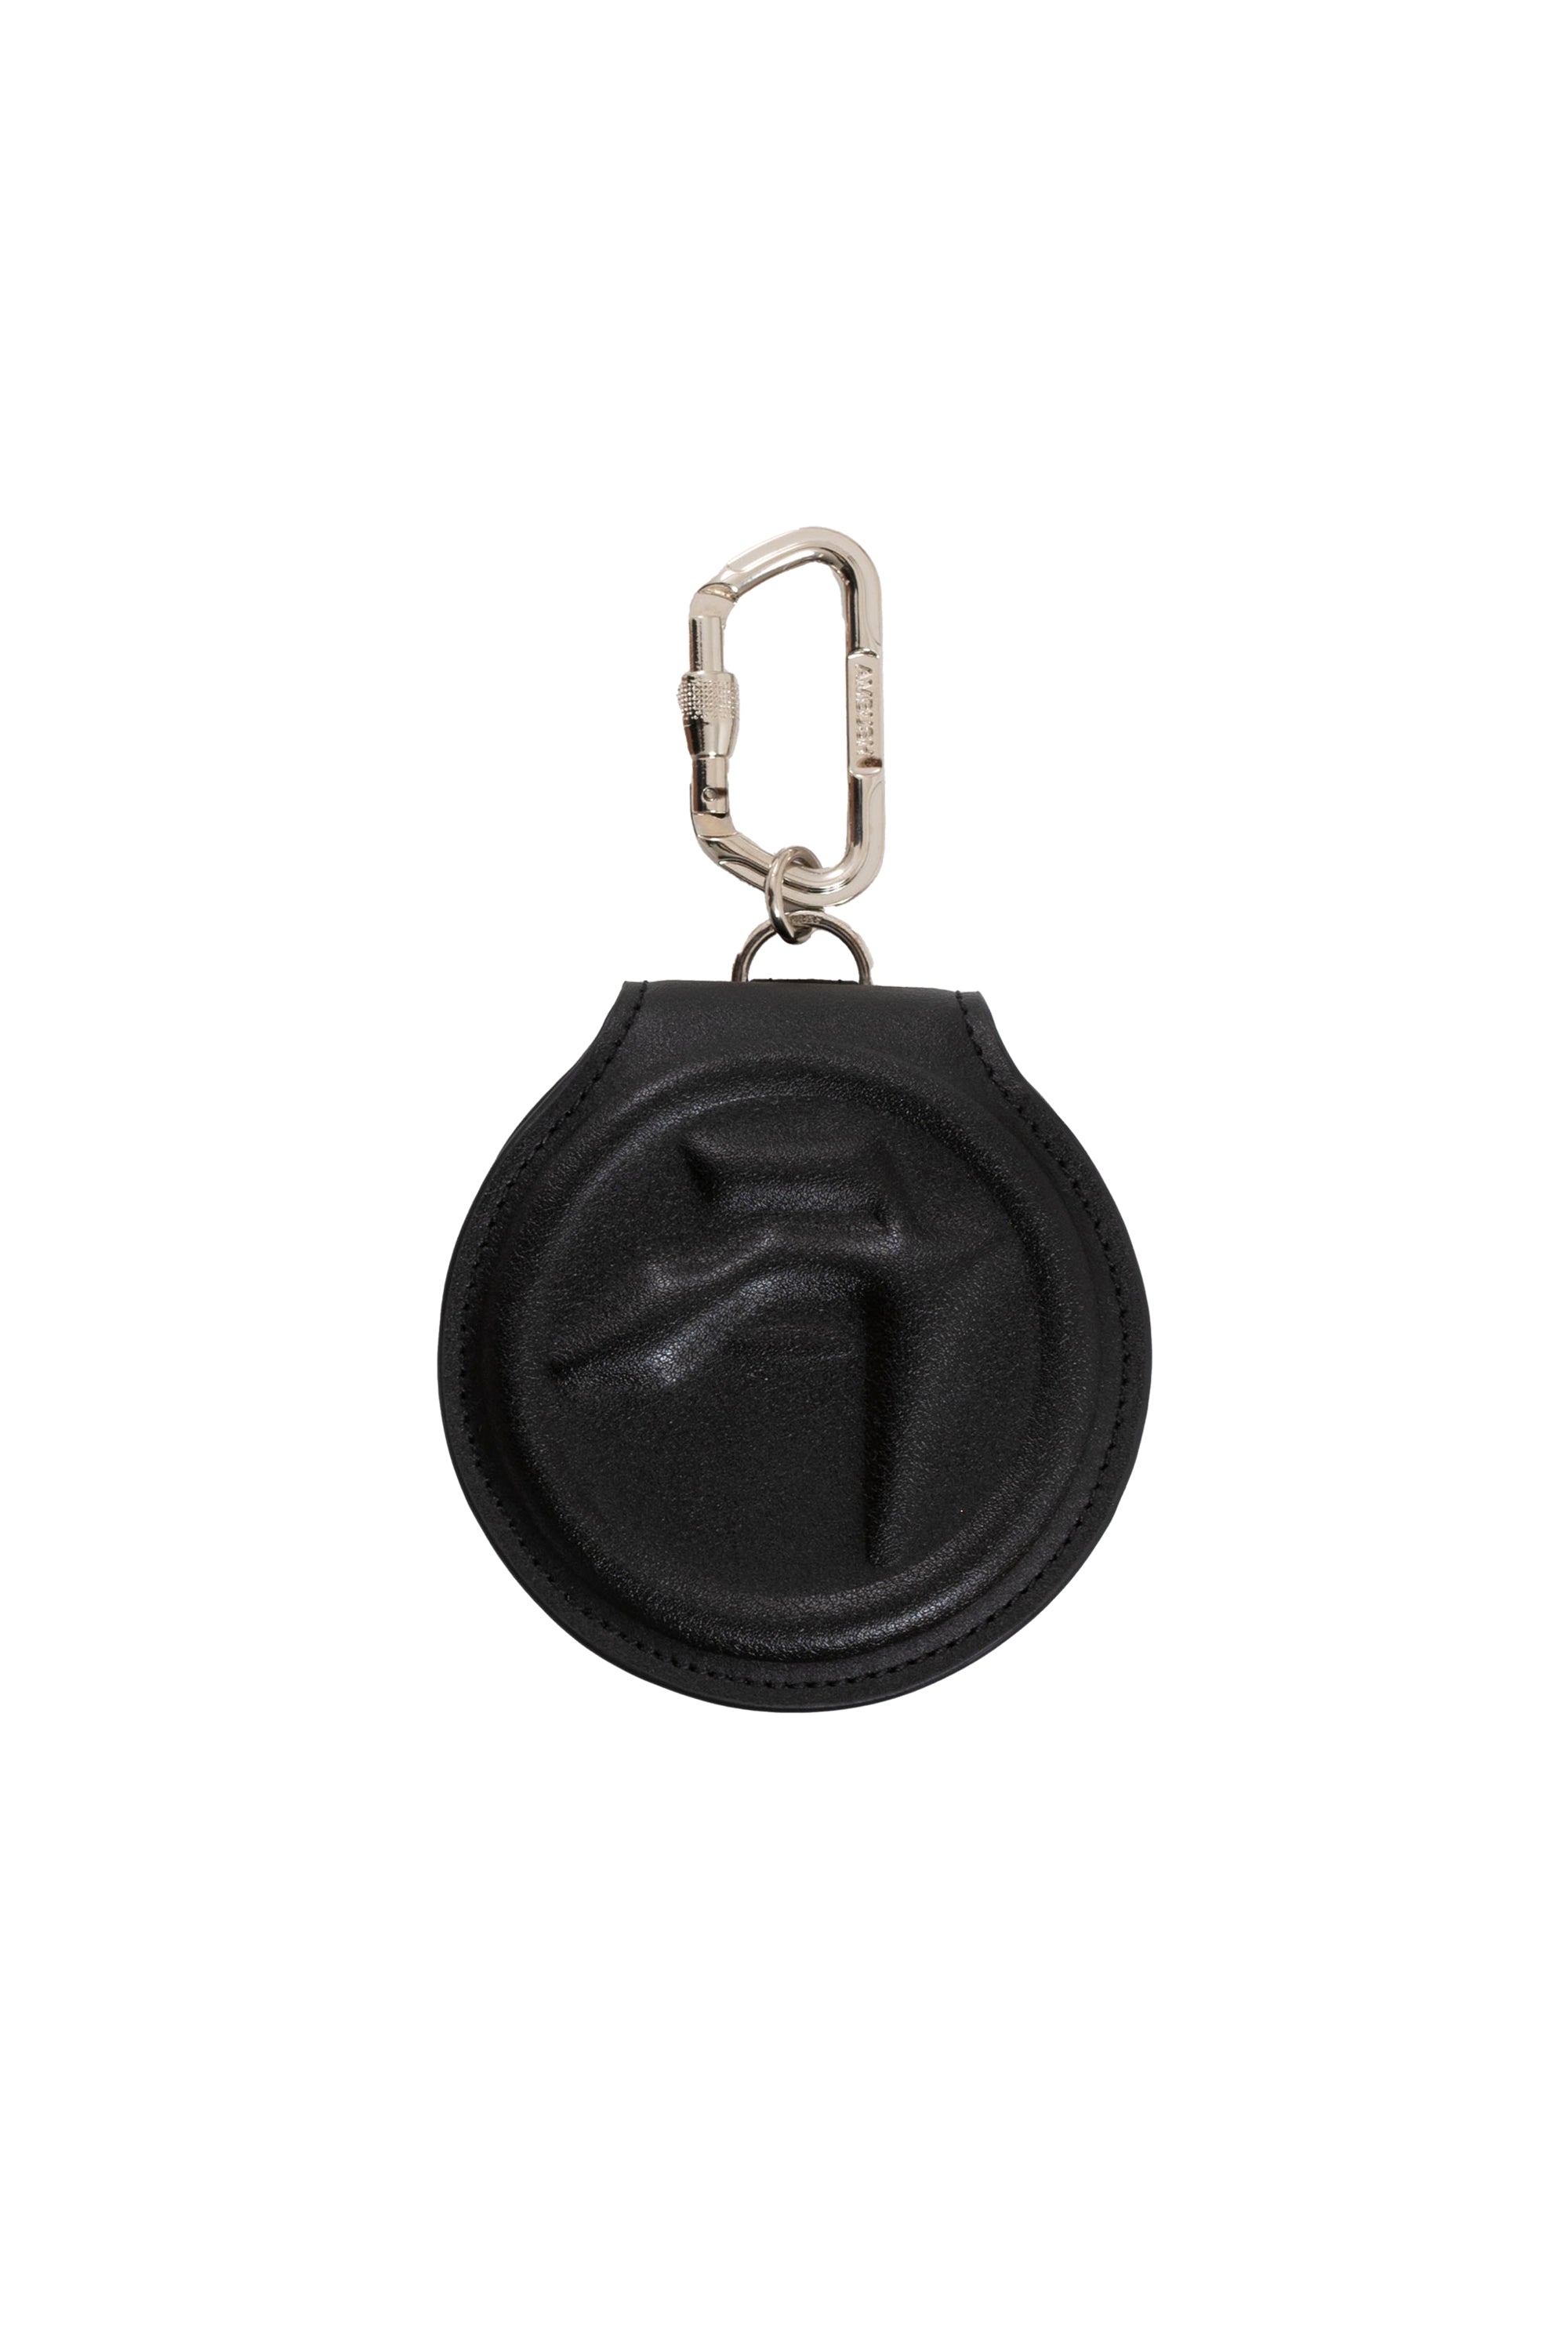 8 Moncler Palm Angels Brown/black rubber key ring